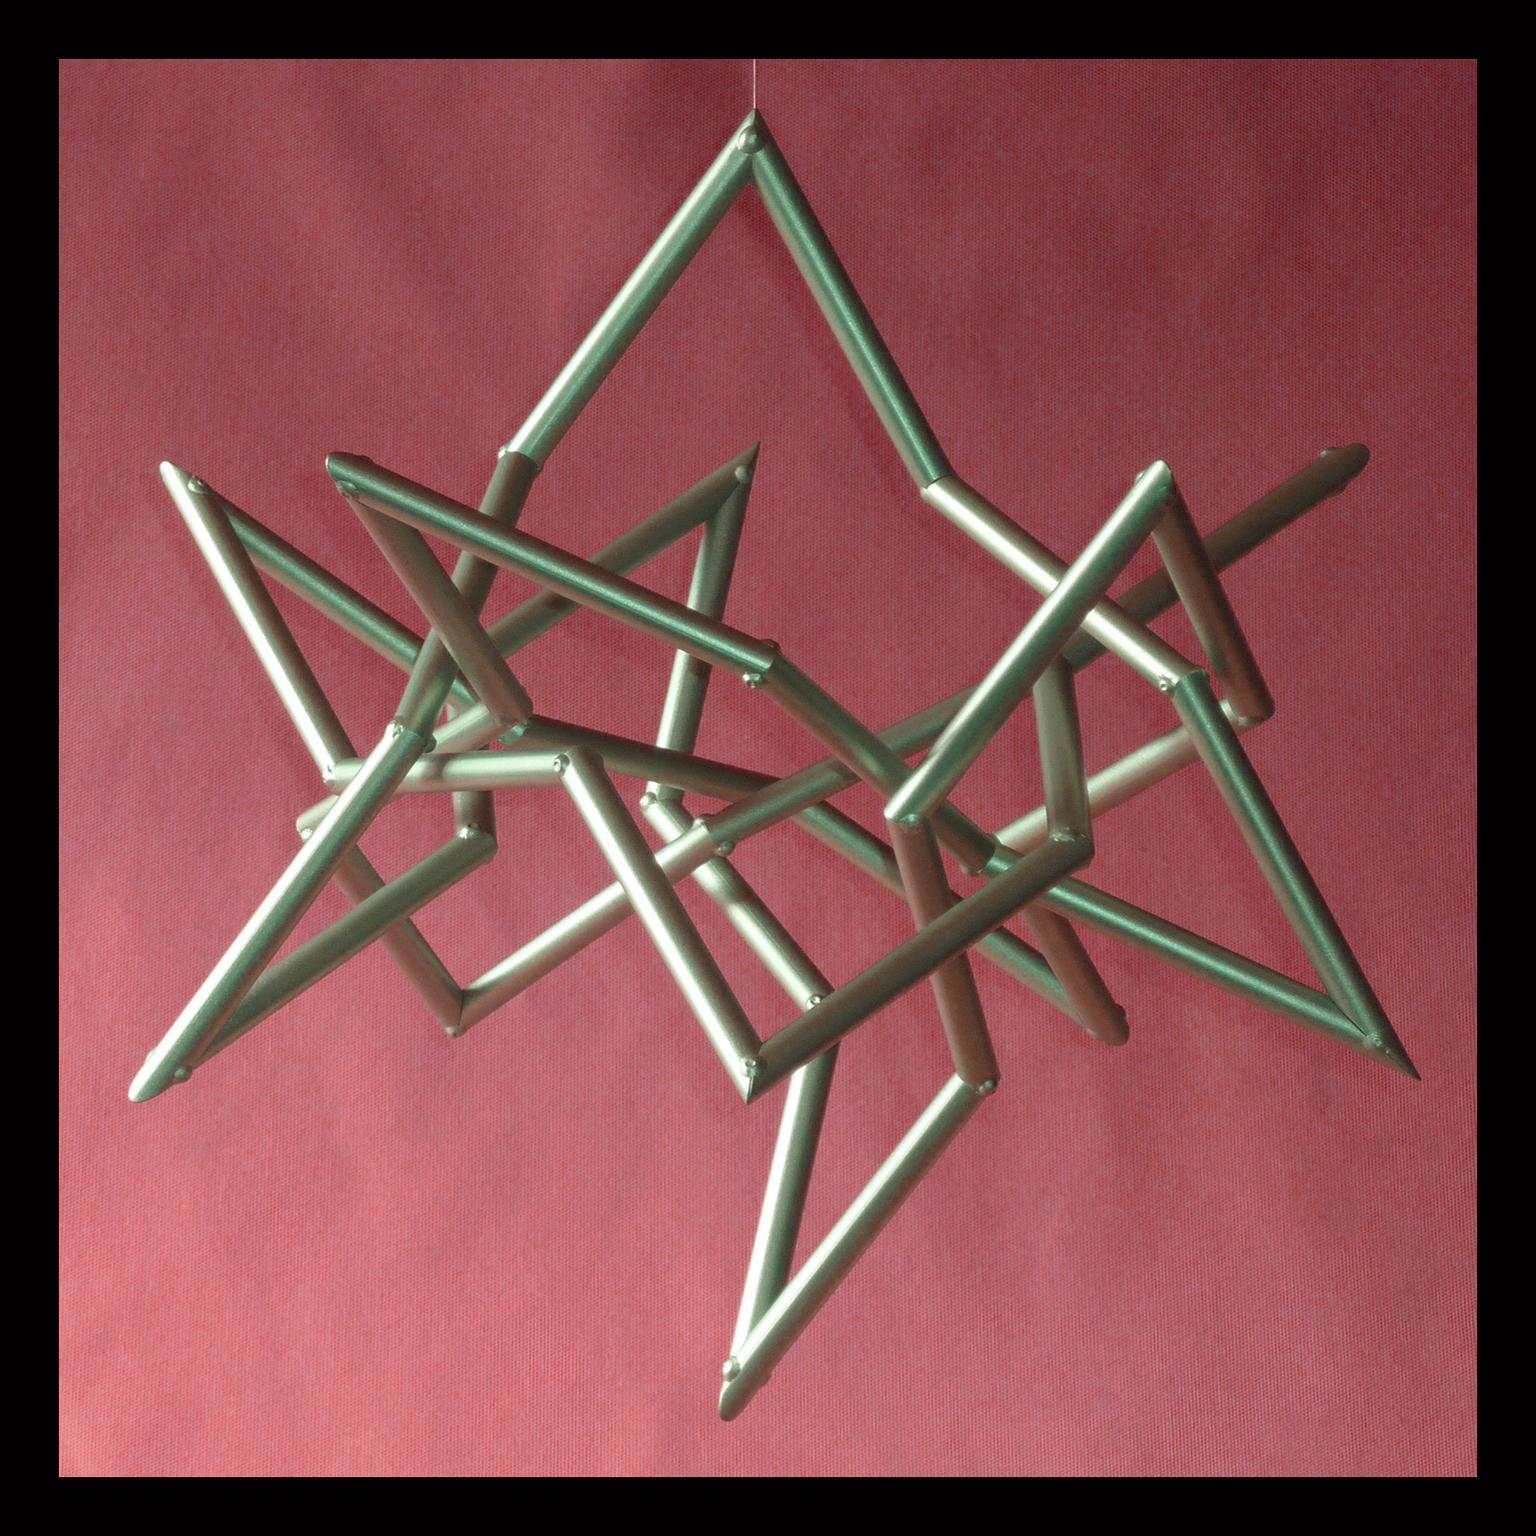 Image for entry 'Fragmented Hamiltonian Cicle. Icosahedron'